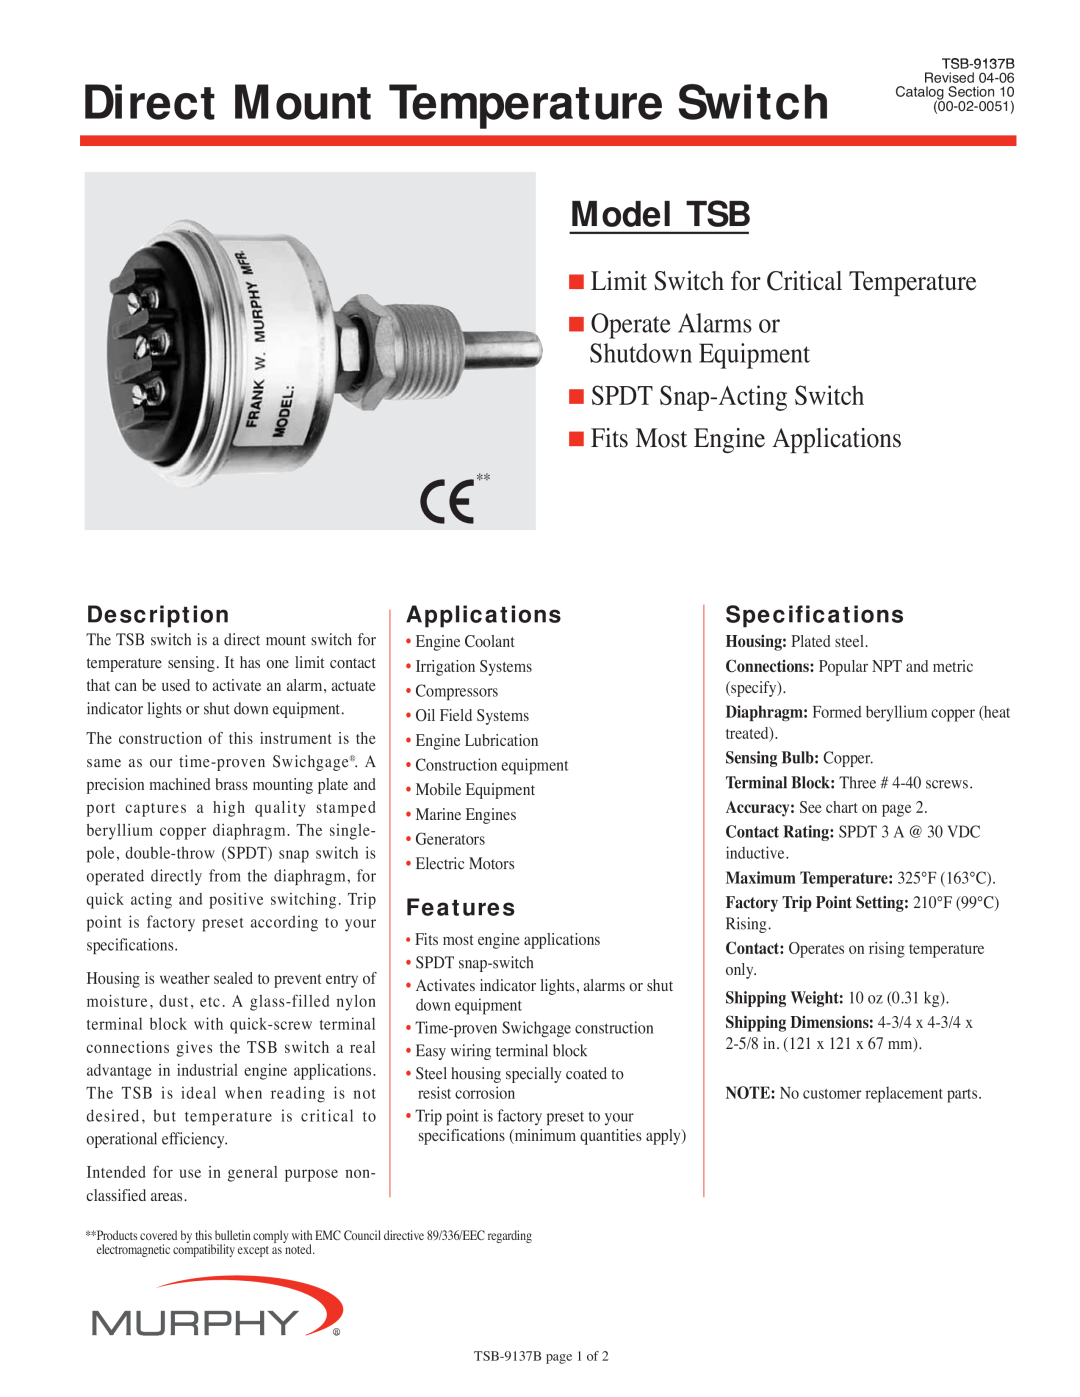 Murphy specifications Description, Applications, Features, Specifications, Model TSB, Sensing Bulb Copper 